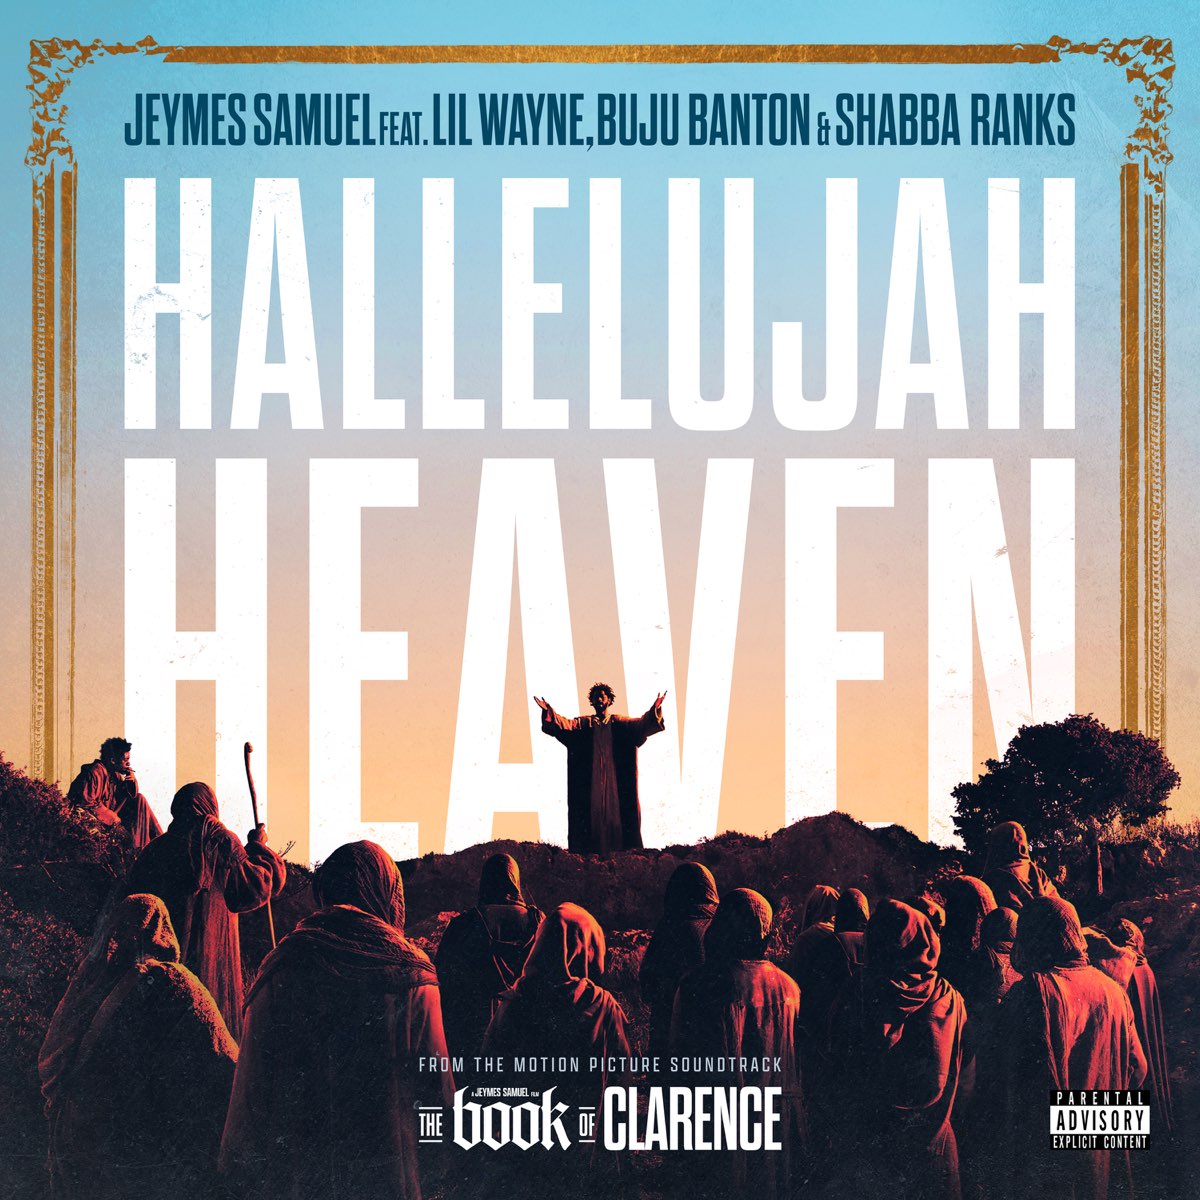 Hallelujah Heaven feat. Lil Wayne, Buju Banton, and Shabba Ranks